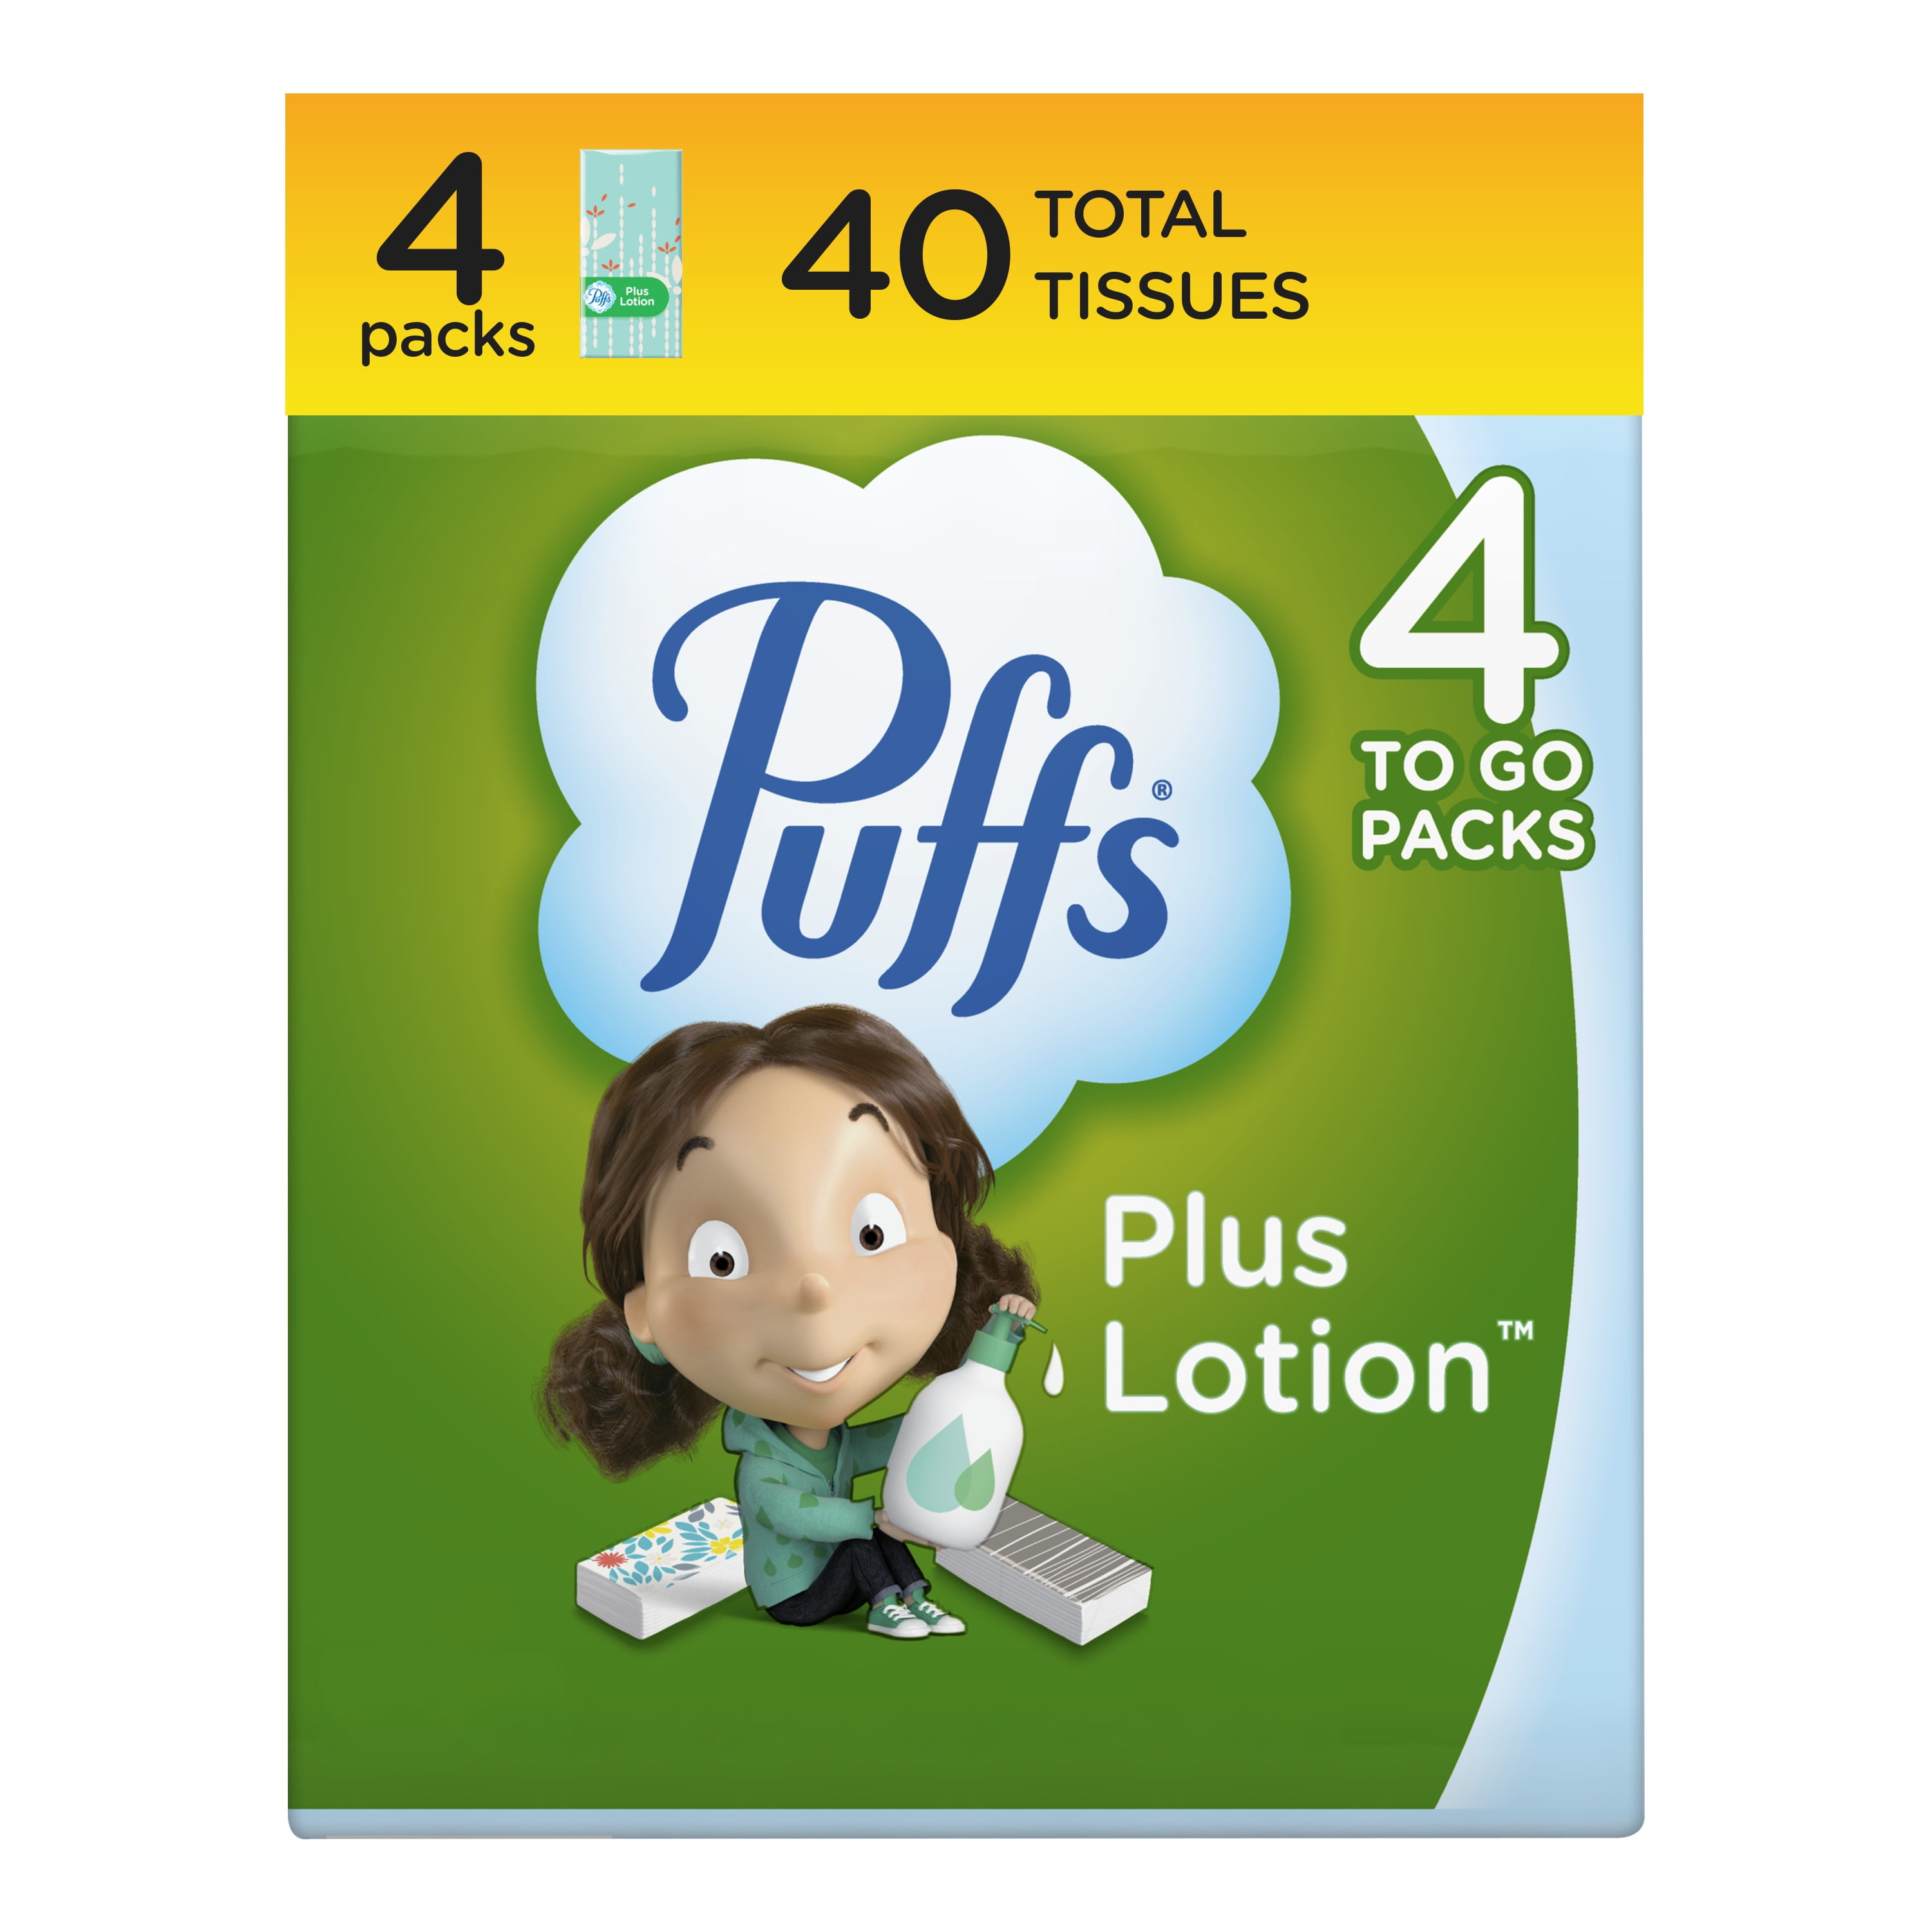 Puffs Facial Tissue, Plus Lotion, White, 2-Ply, 4 Purse Packs - 4 - 16 tissue packs [40 tissues]